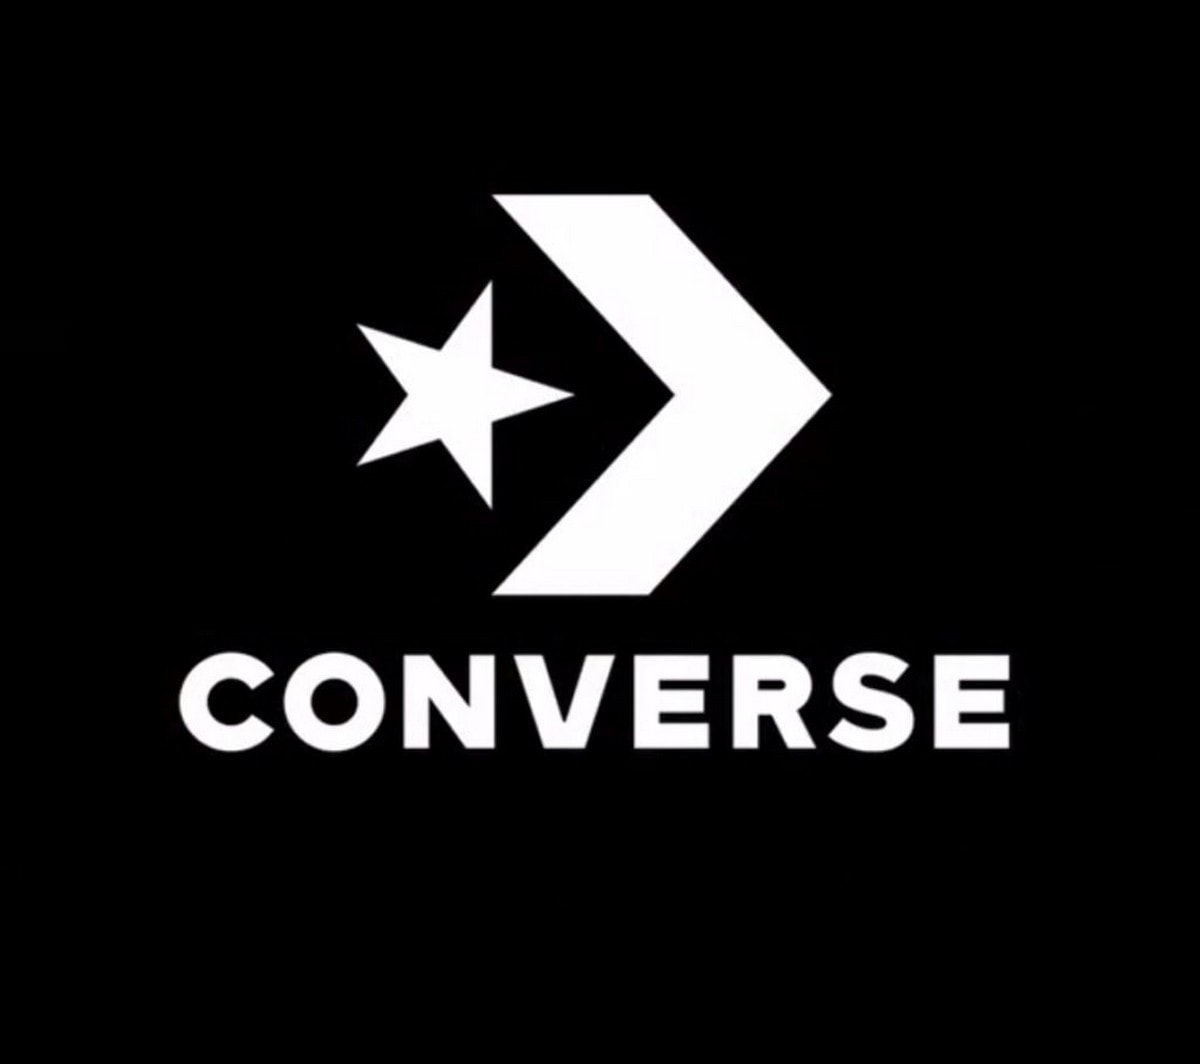 converse target market